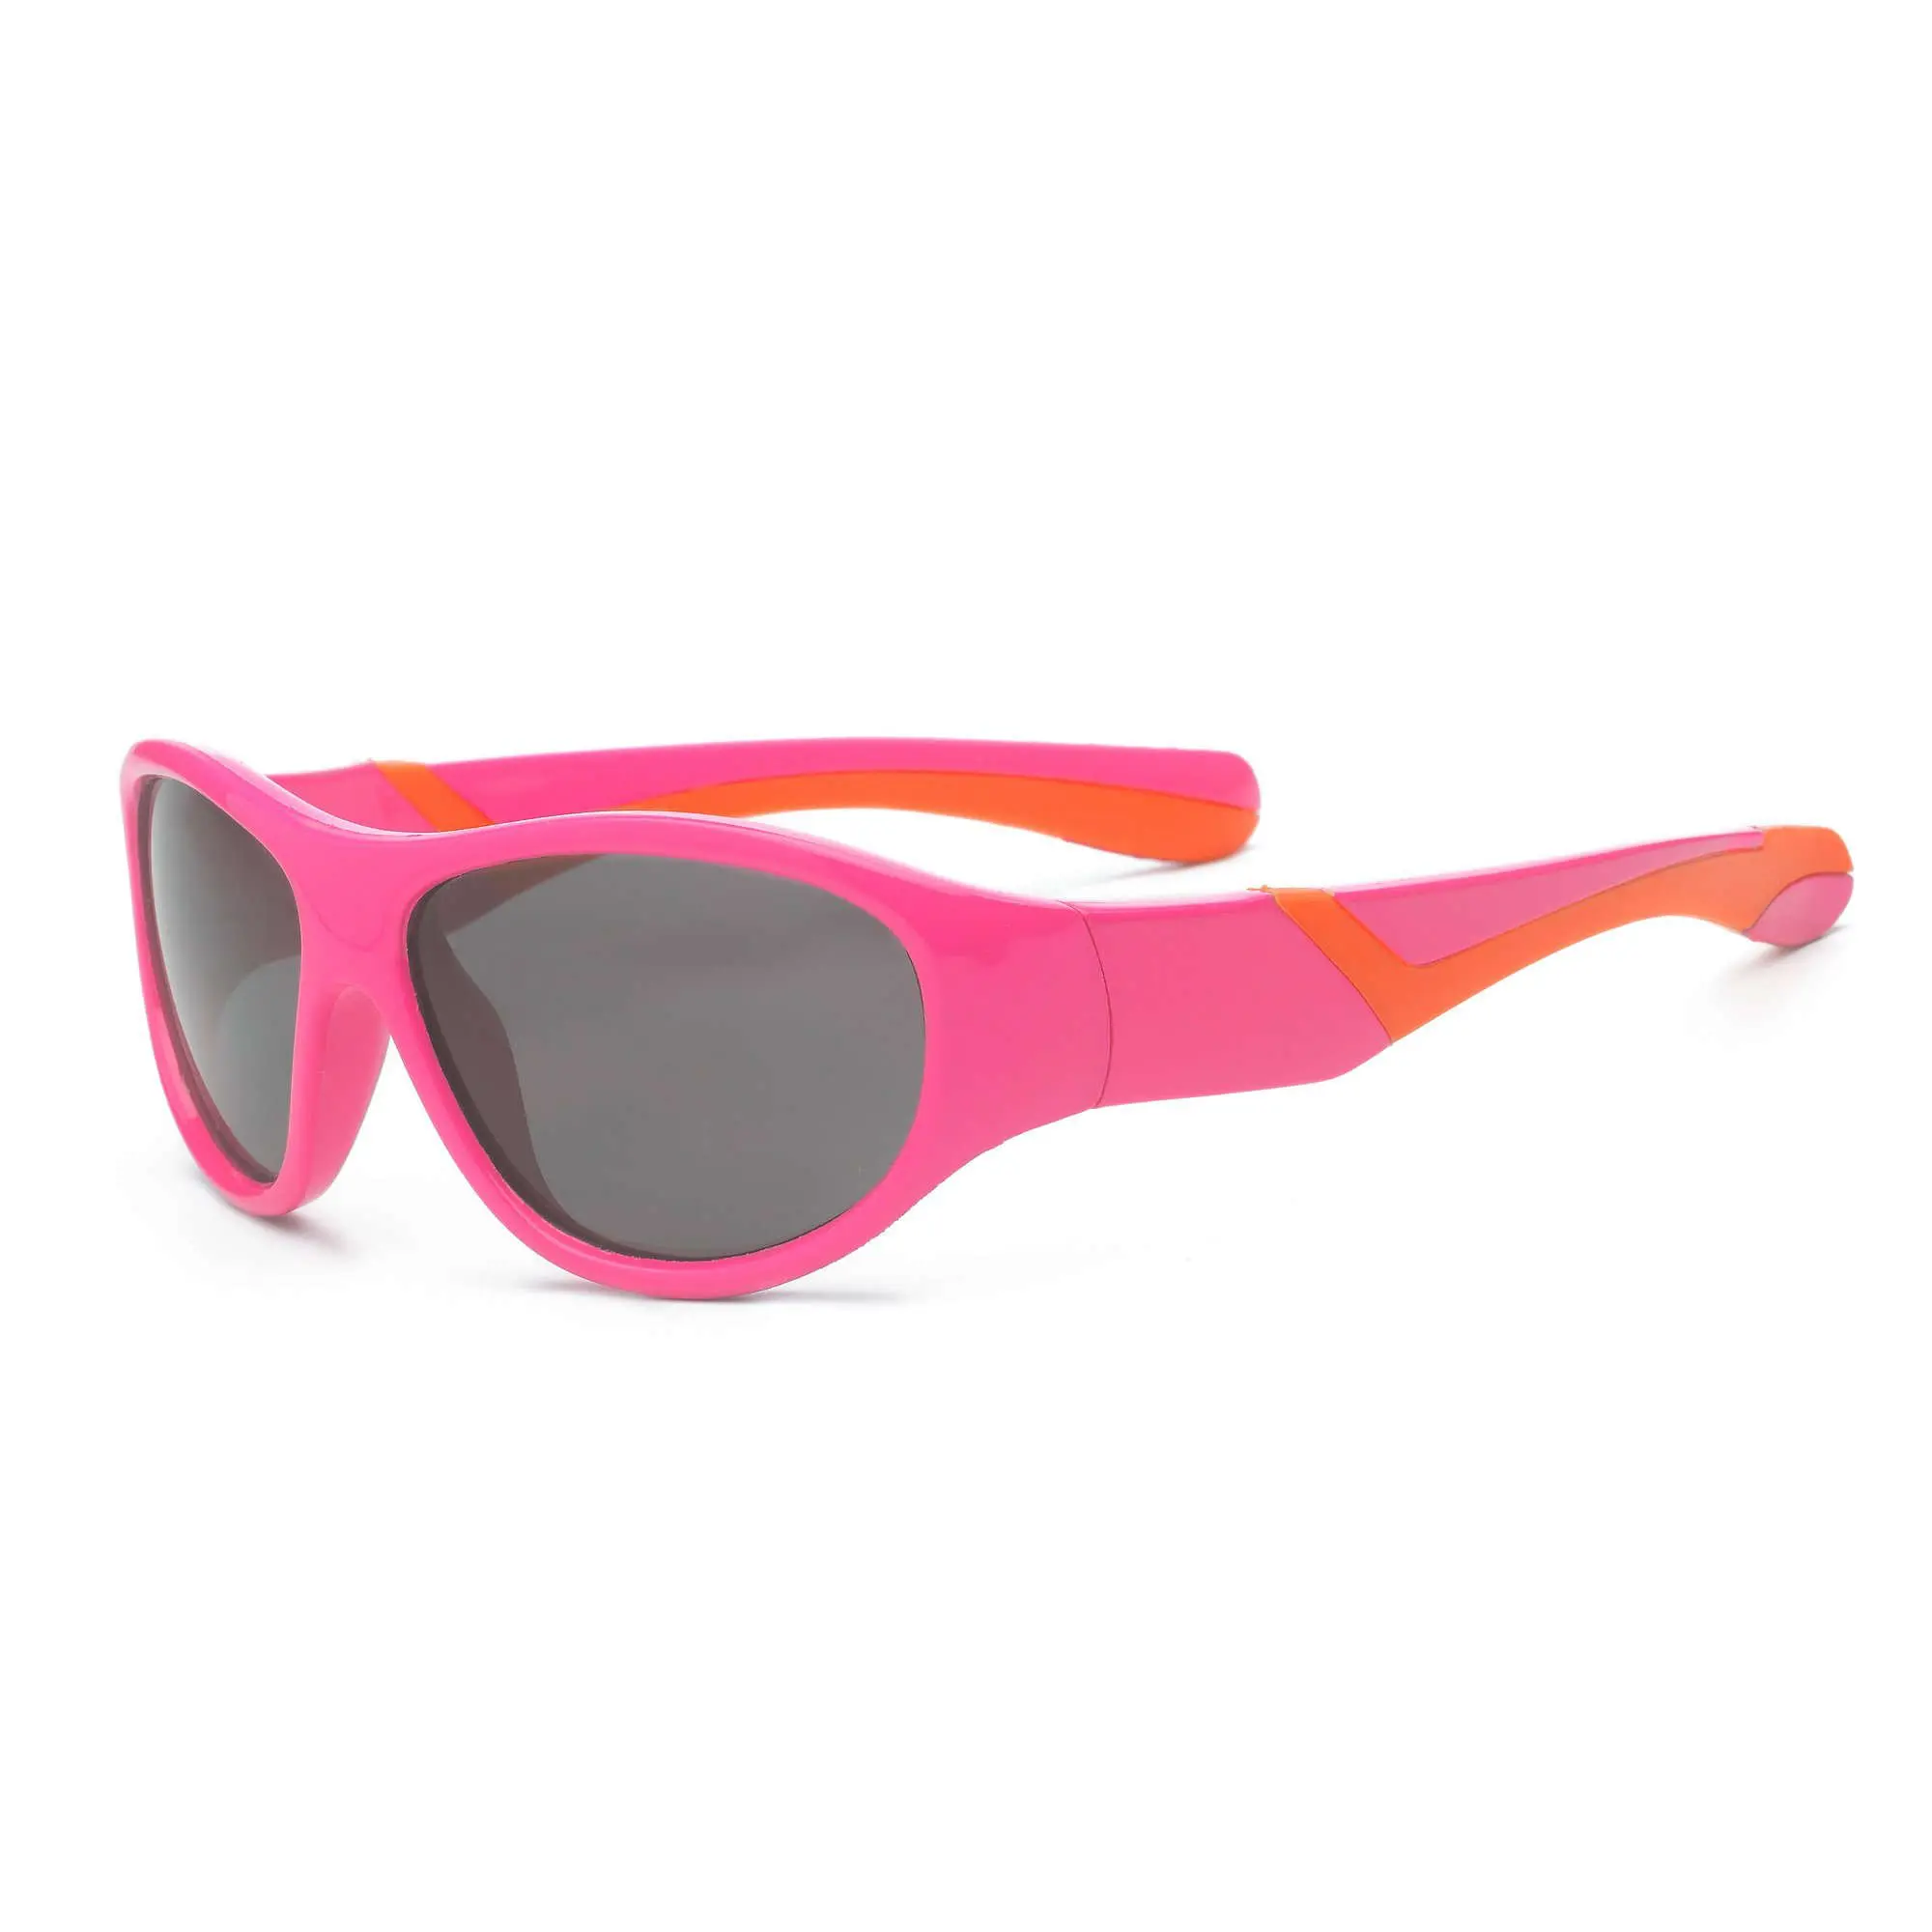 Discover Pink/Orange Sunglasses